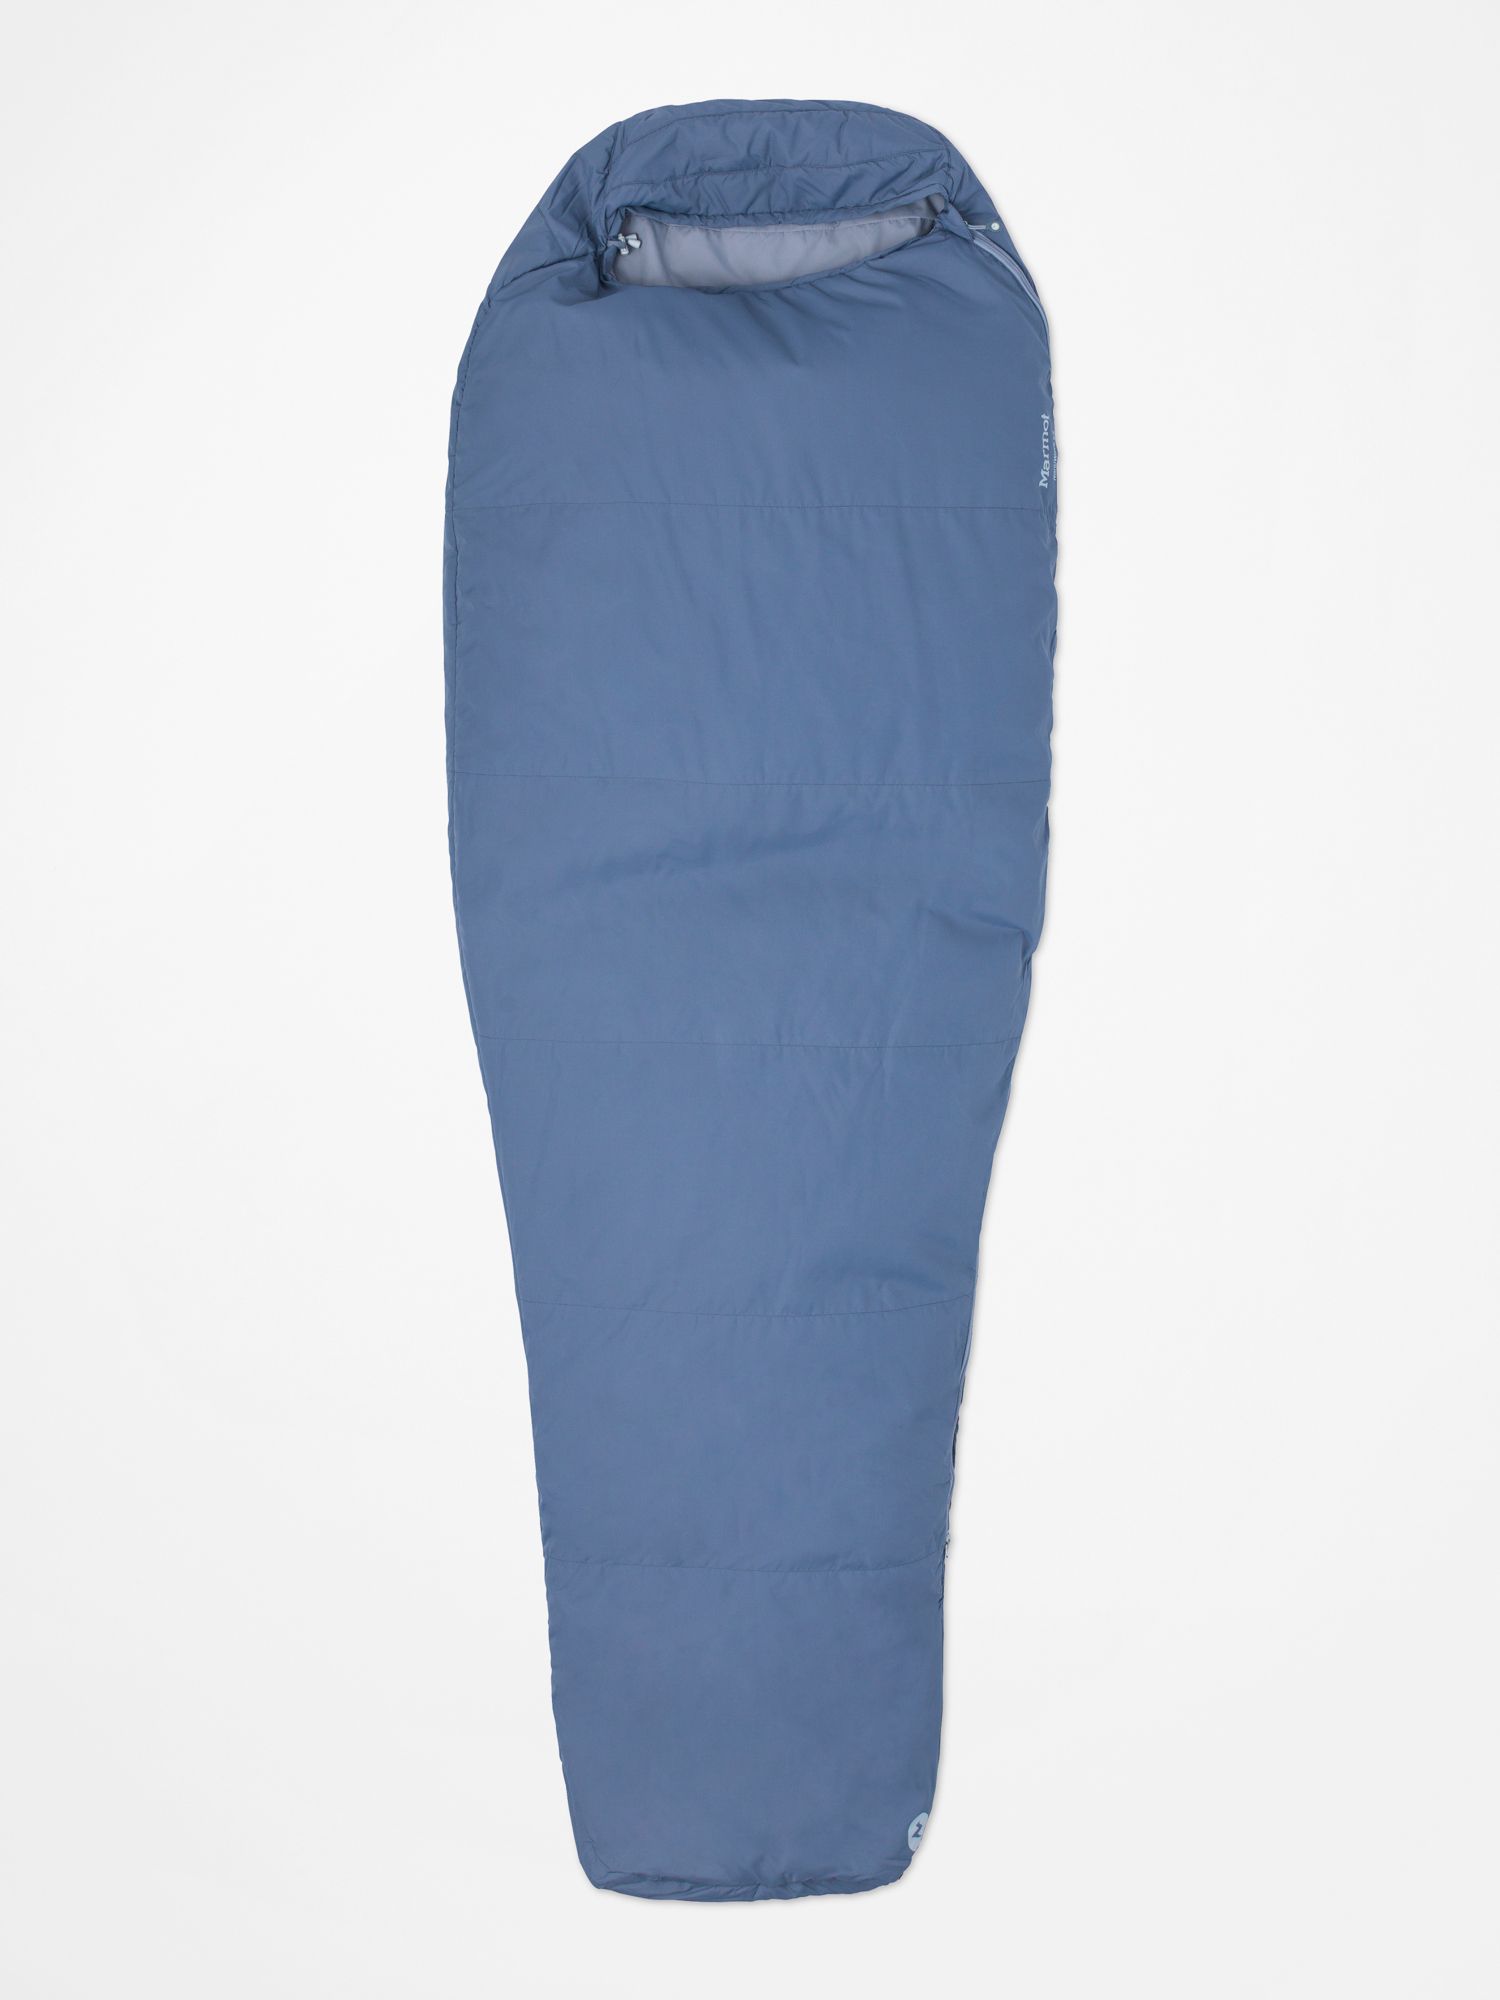 Nanowave 55° Sleeping Bag - Long